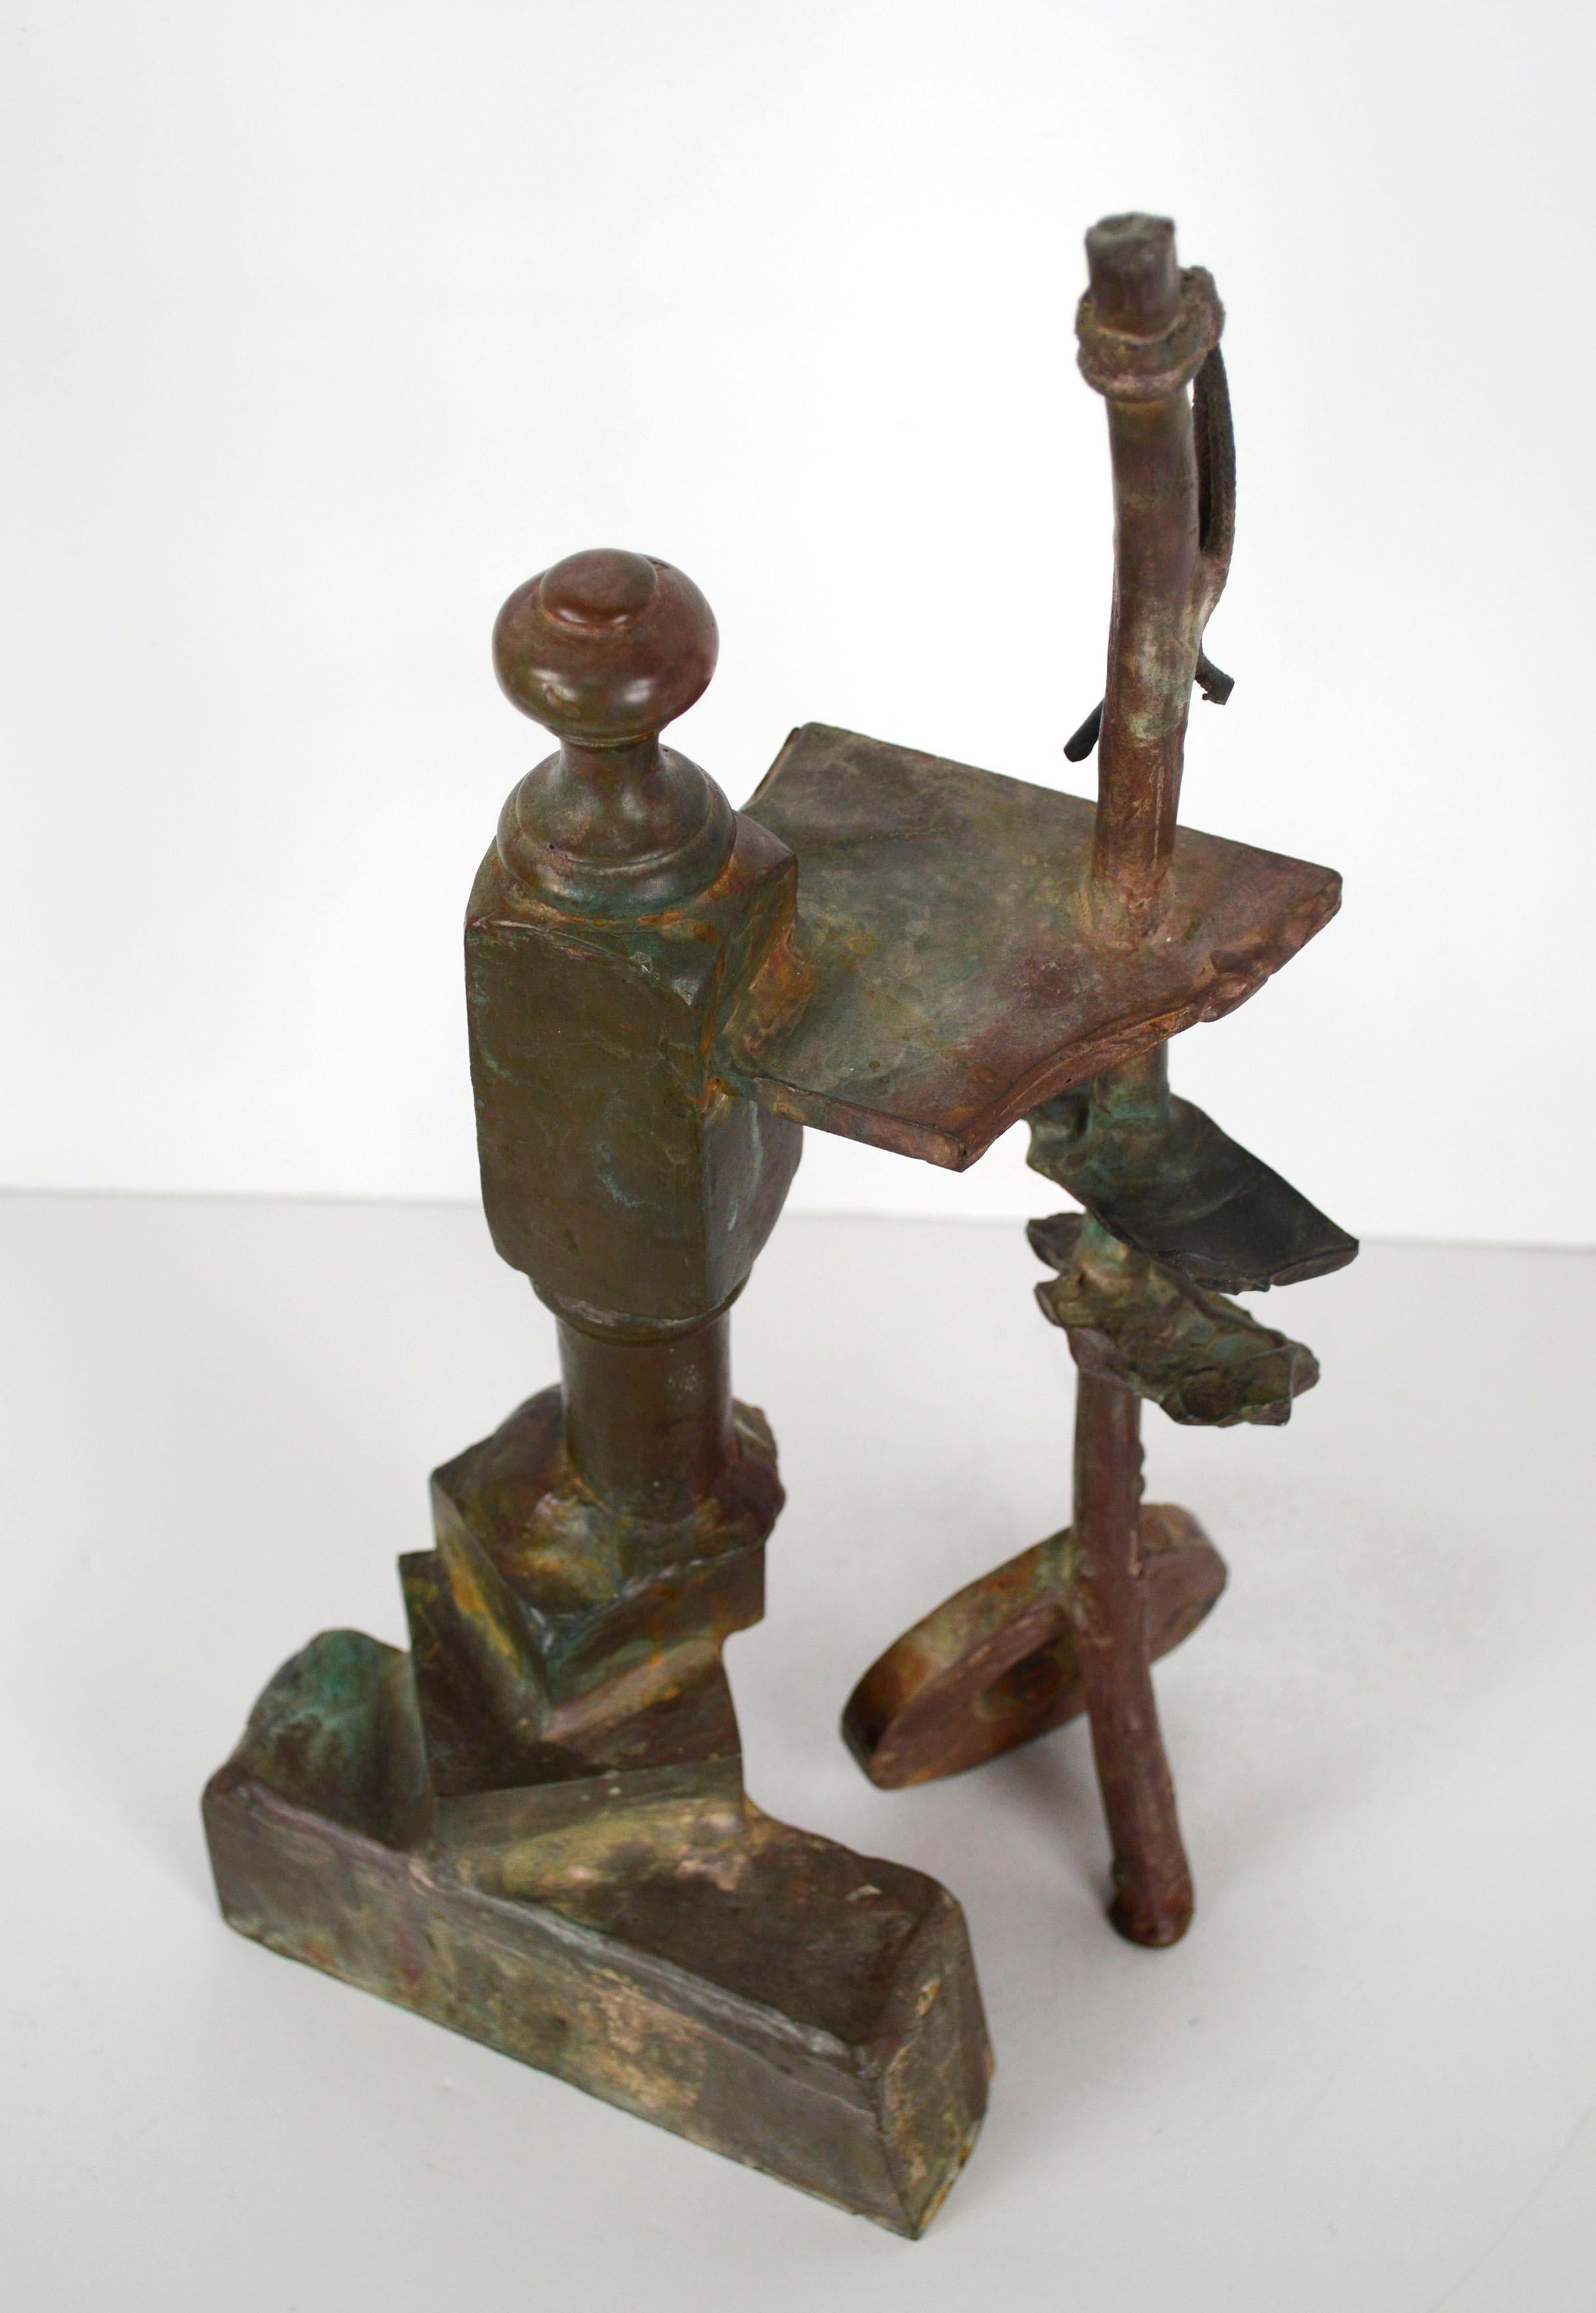 Abstract Sculpture David Phelps - Sculpture d'assemblage moderne abstraite en bronze